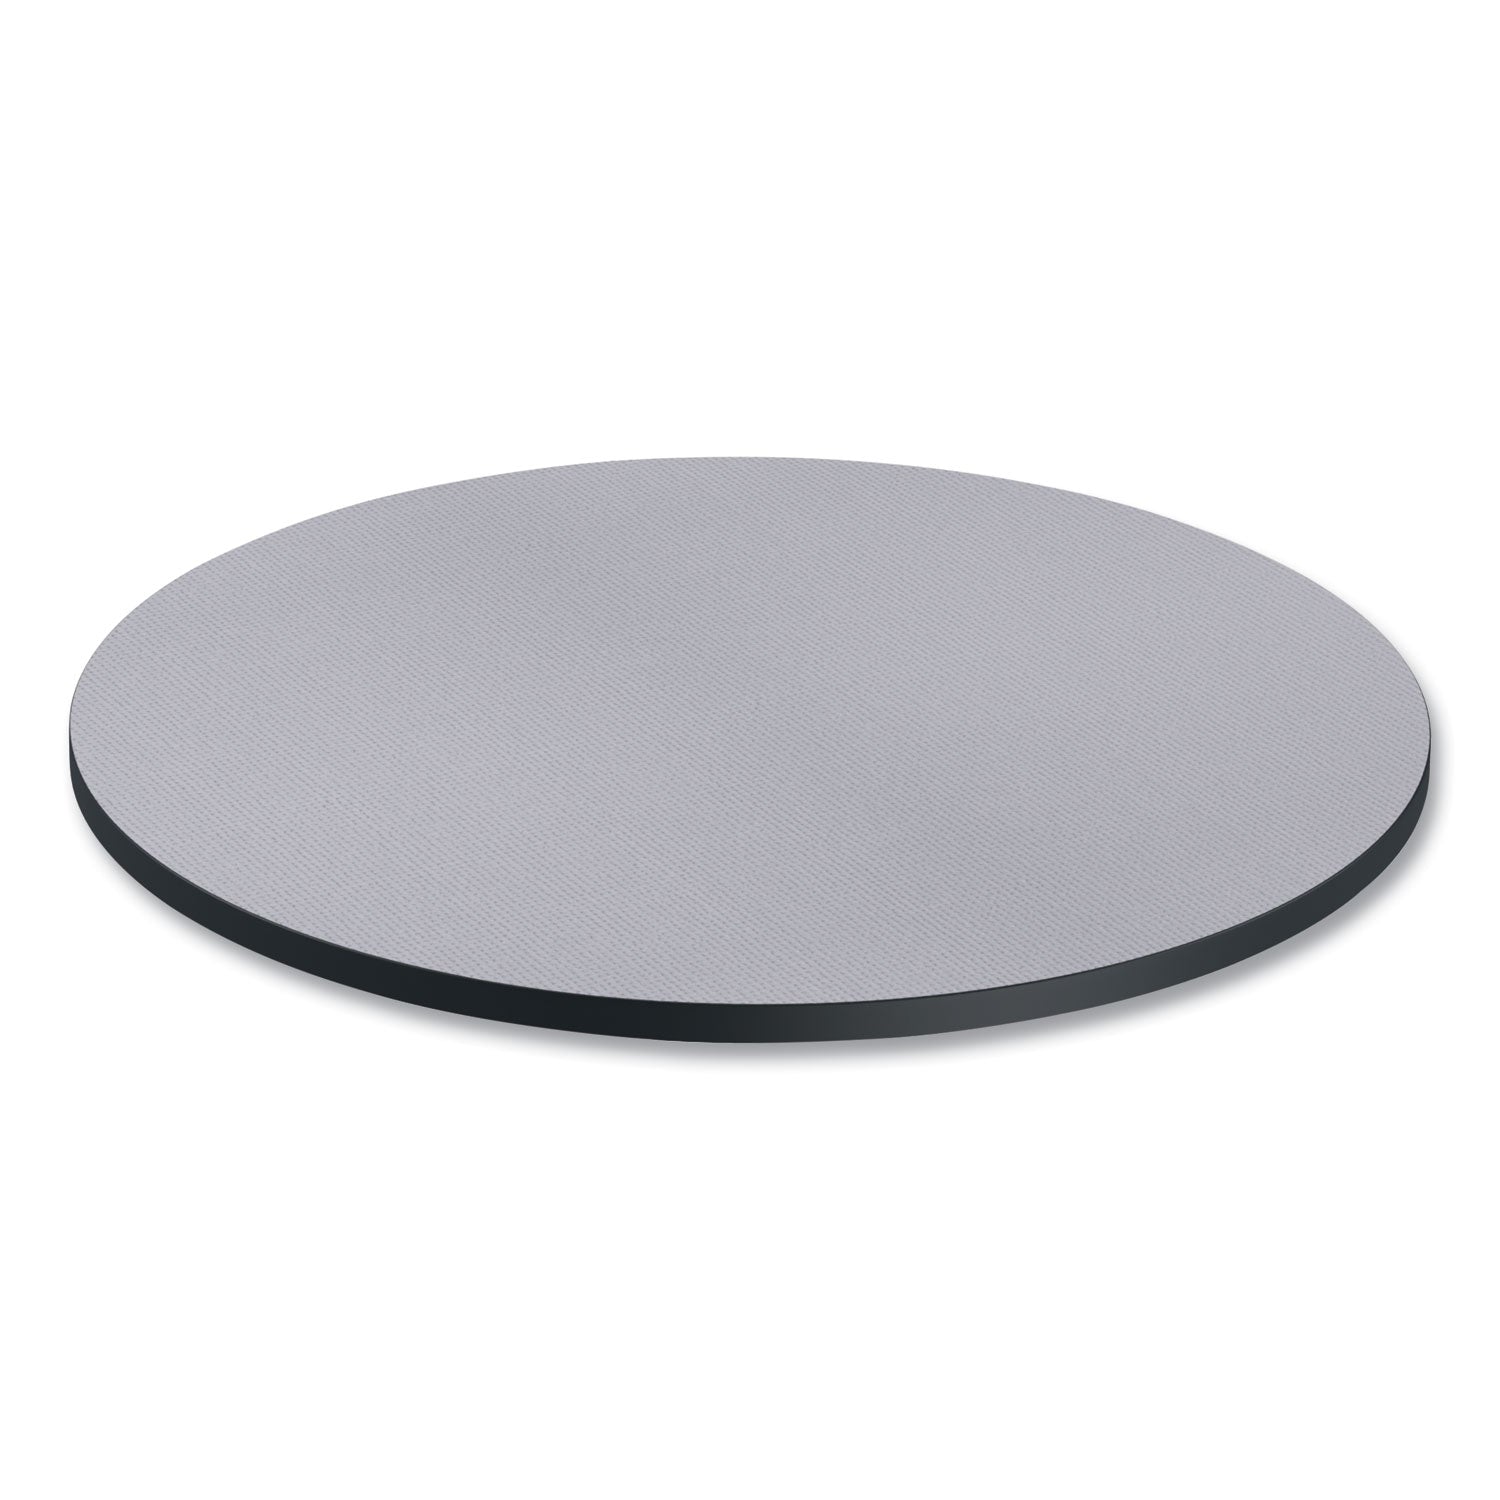 reversible-laminate-table-top-round-355-diameter-white-gray_alettrd36wg - 7